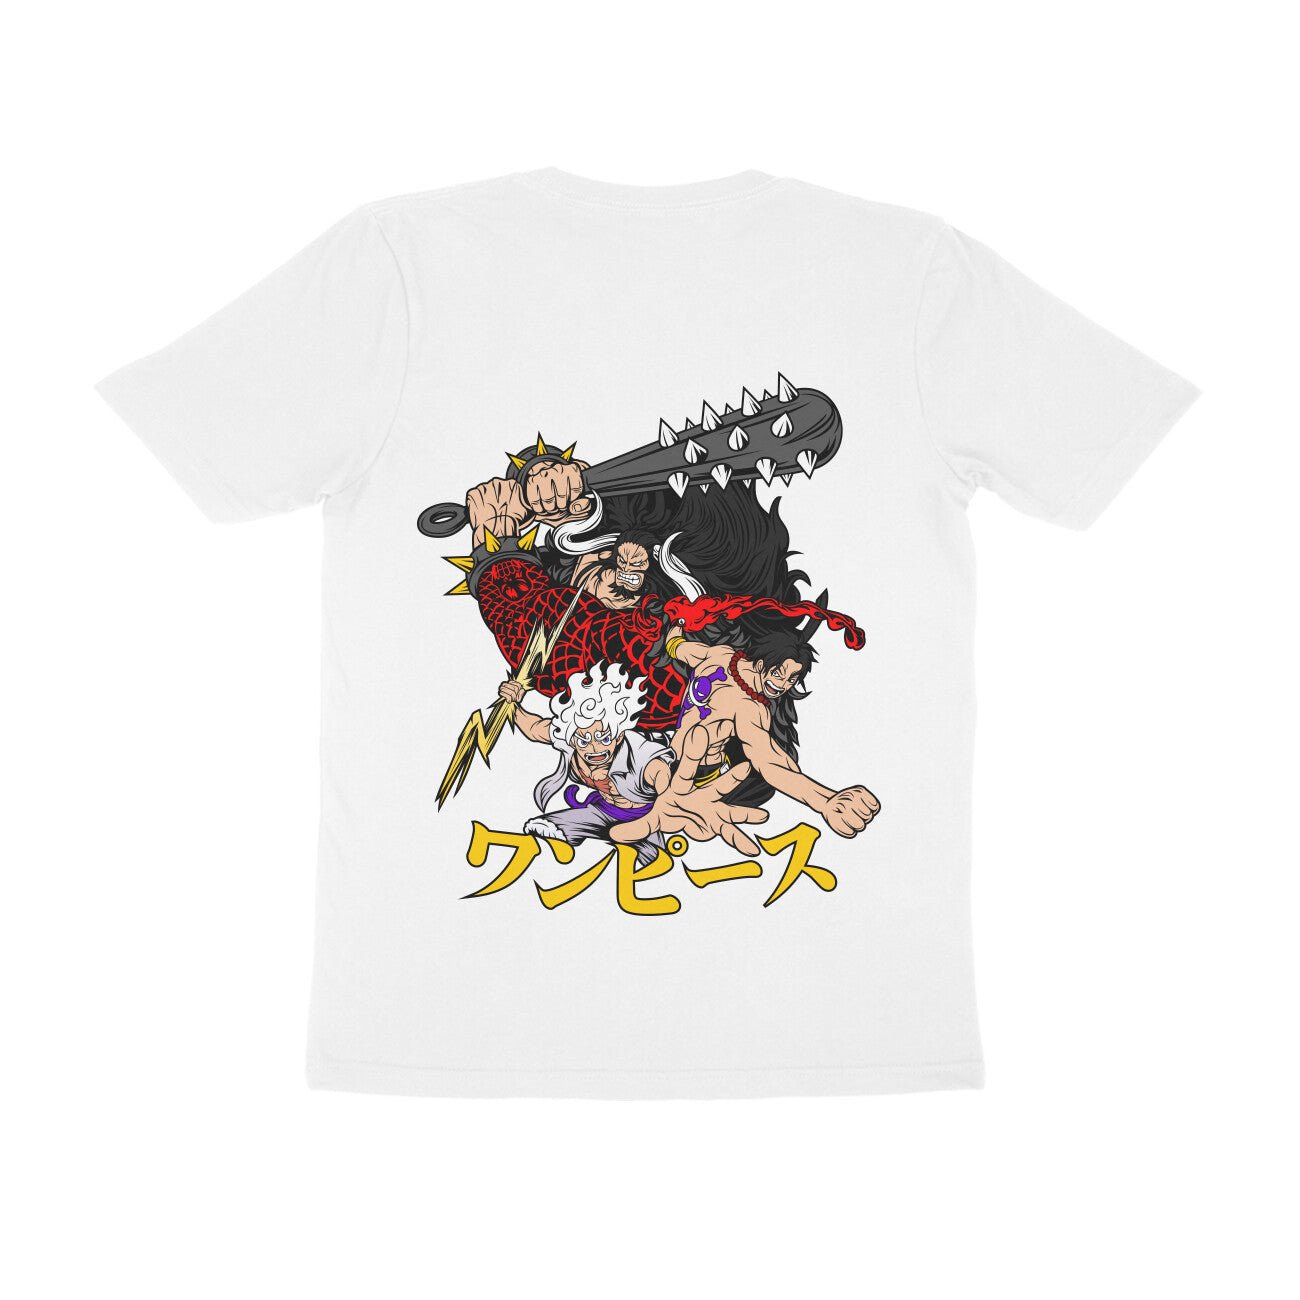 One Piece - Luffy x Kaido x Ace - Tshirt - Kashiba Store